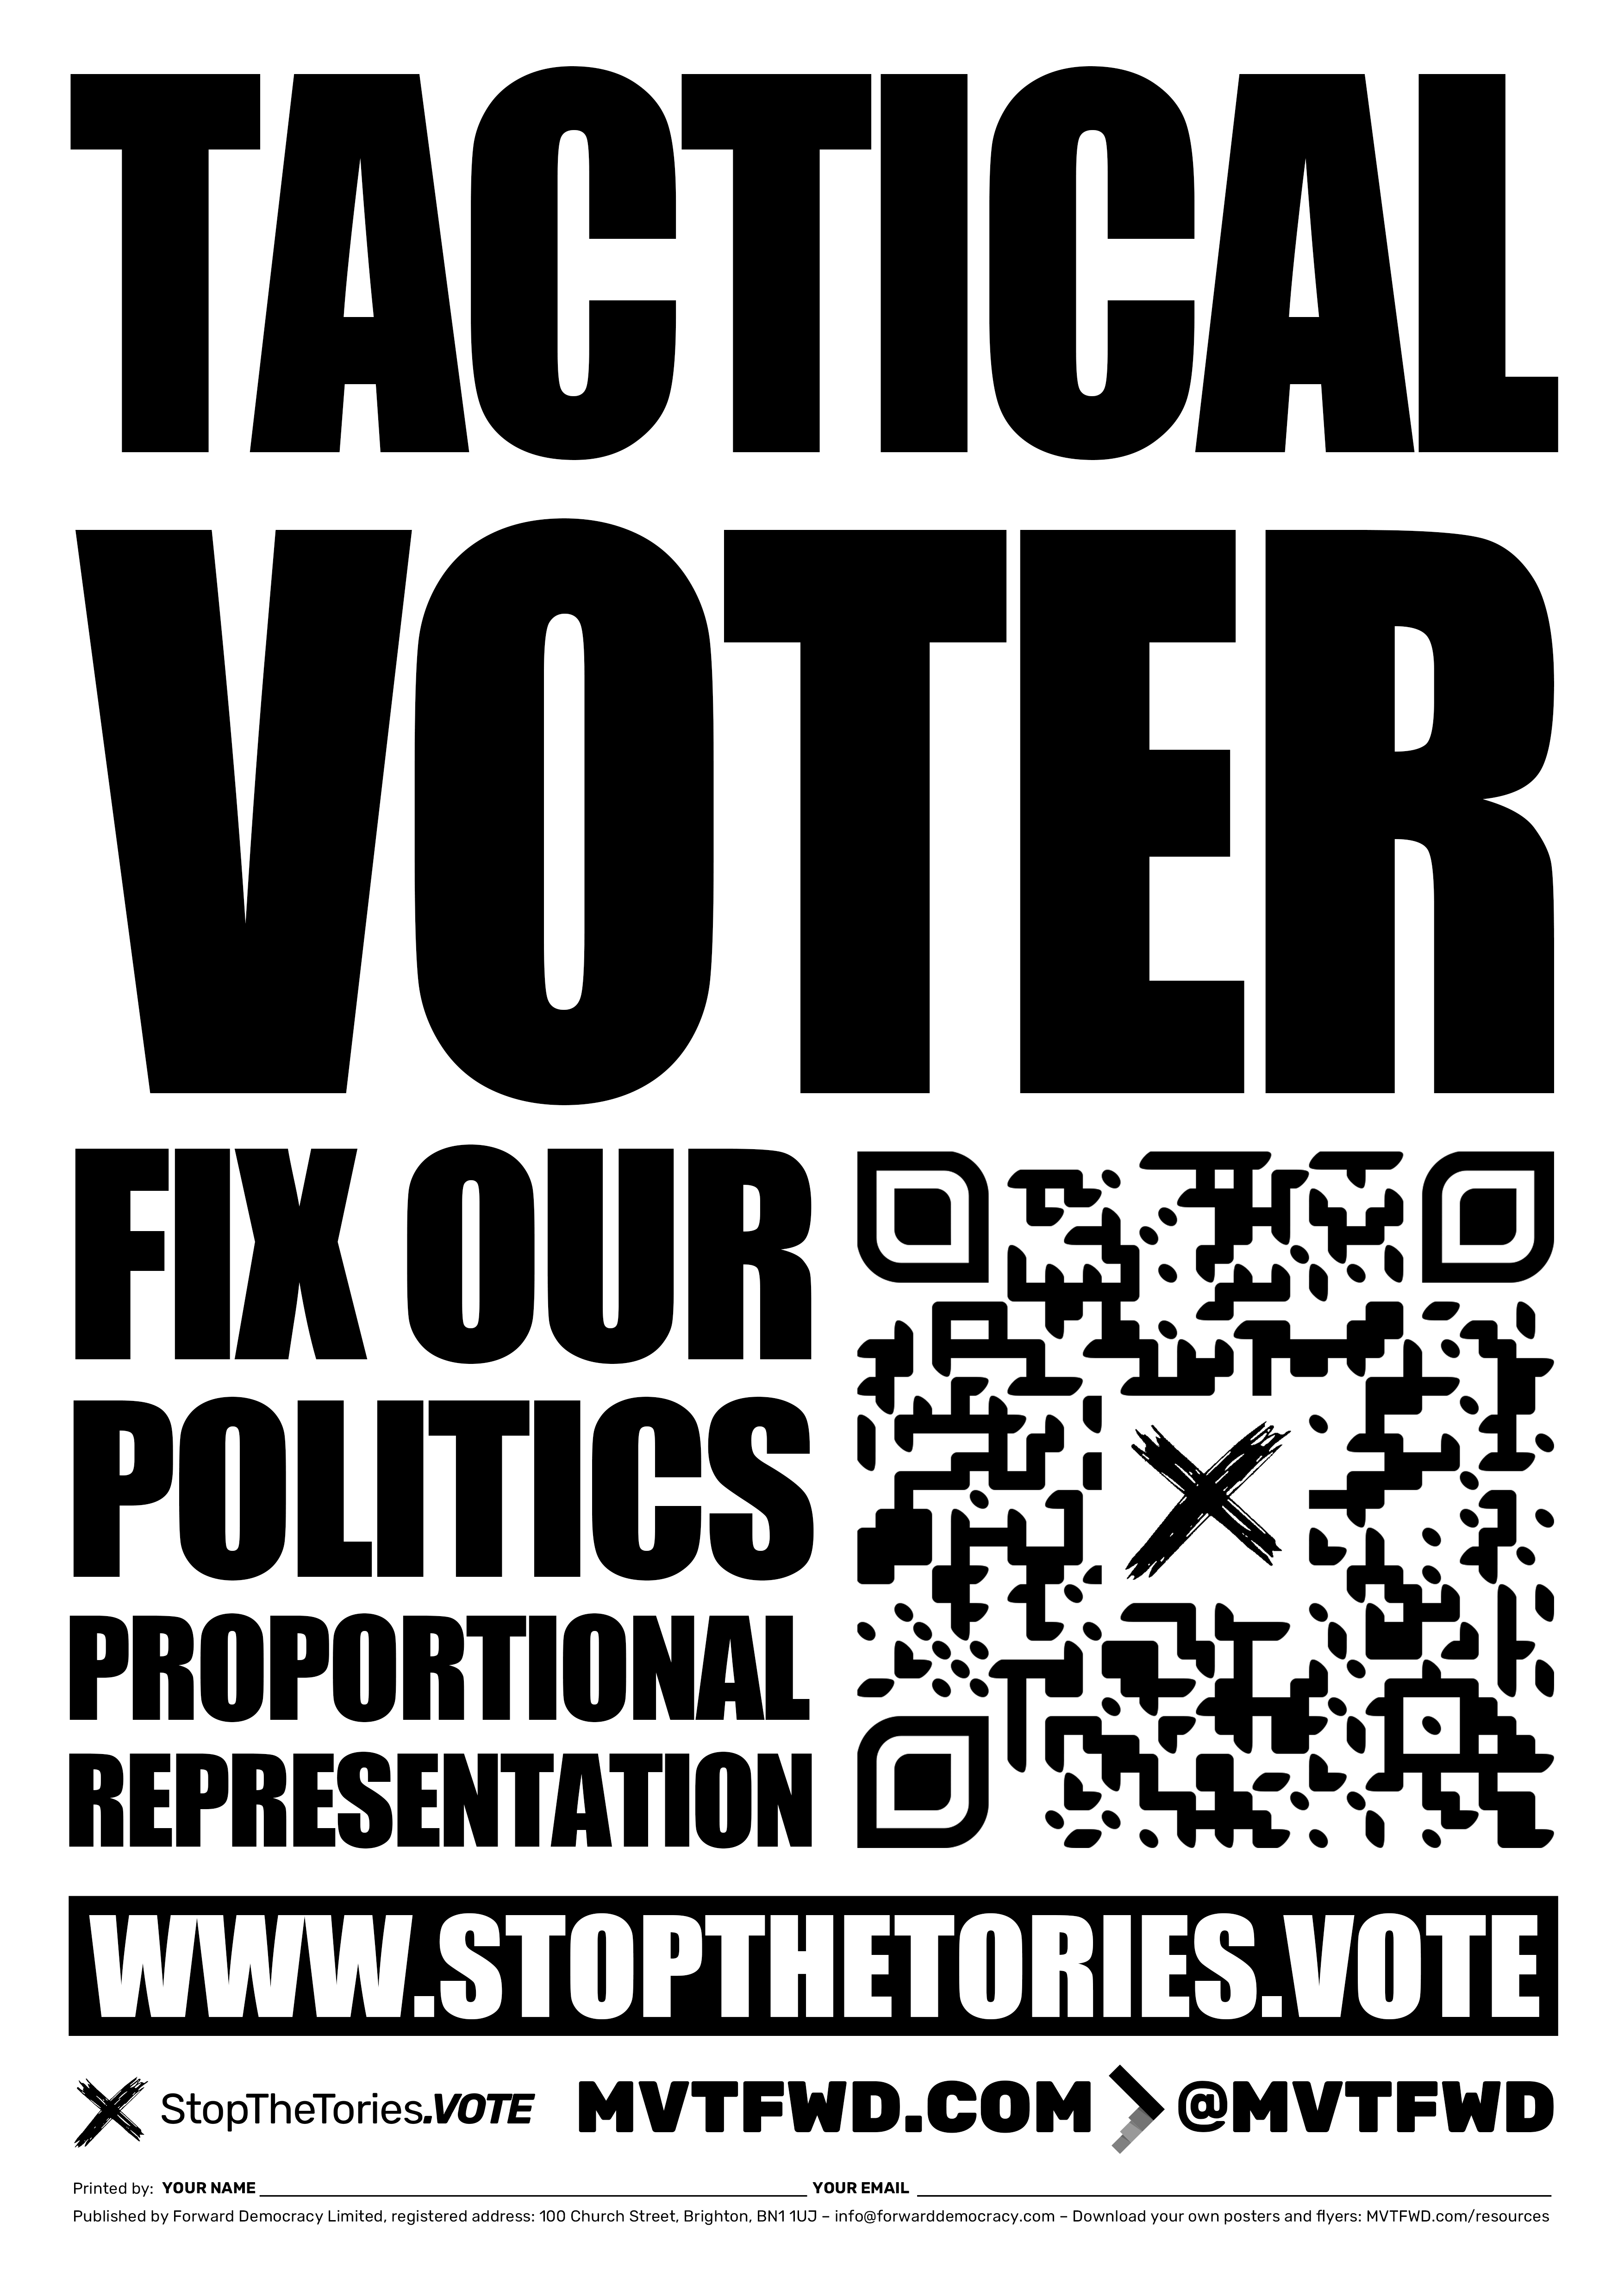 StopTheTories Tactical Voter vertical poster